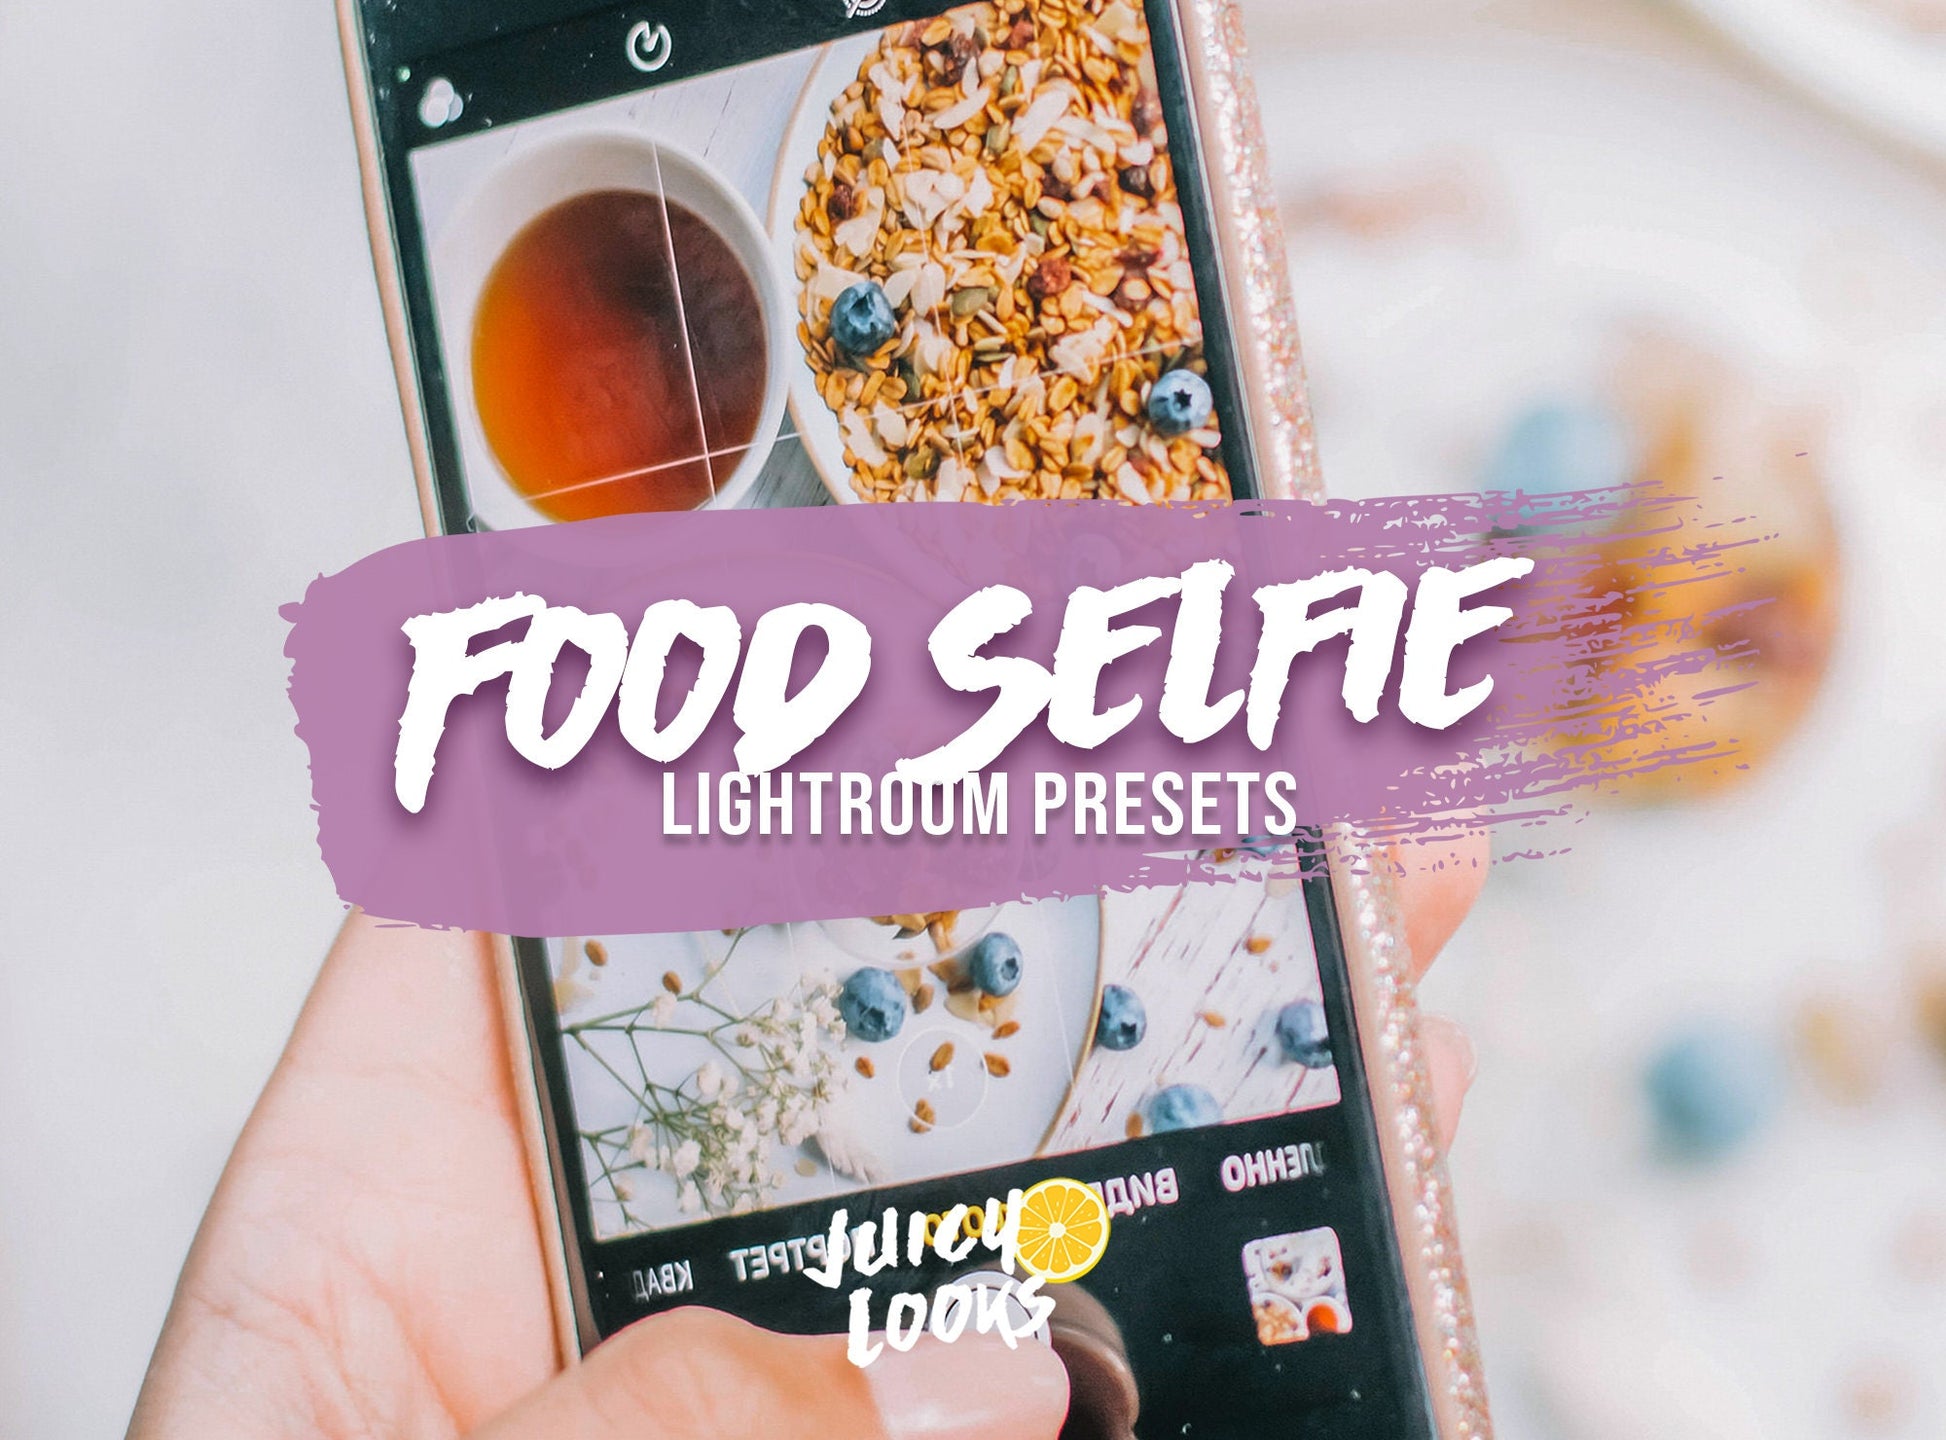 Food Selfie Lightroom Presets for Mobile & Desktop - Juicy Looks Presets